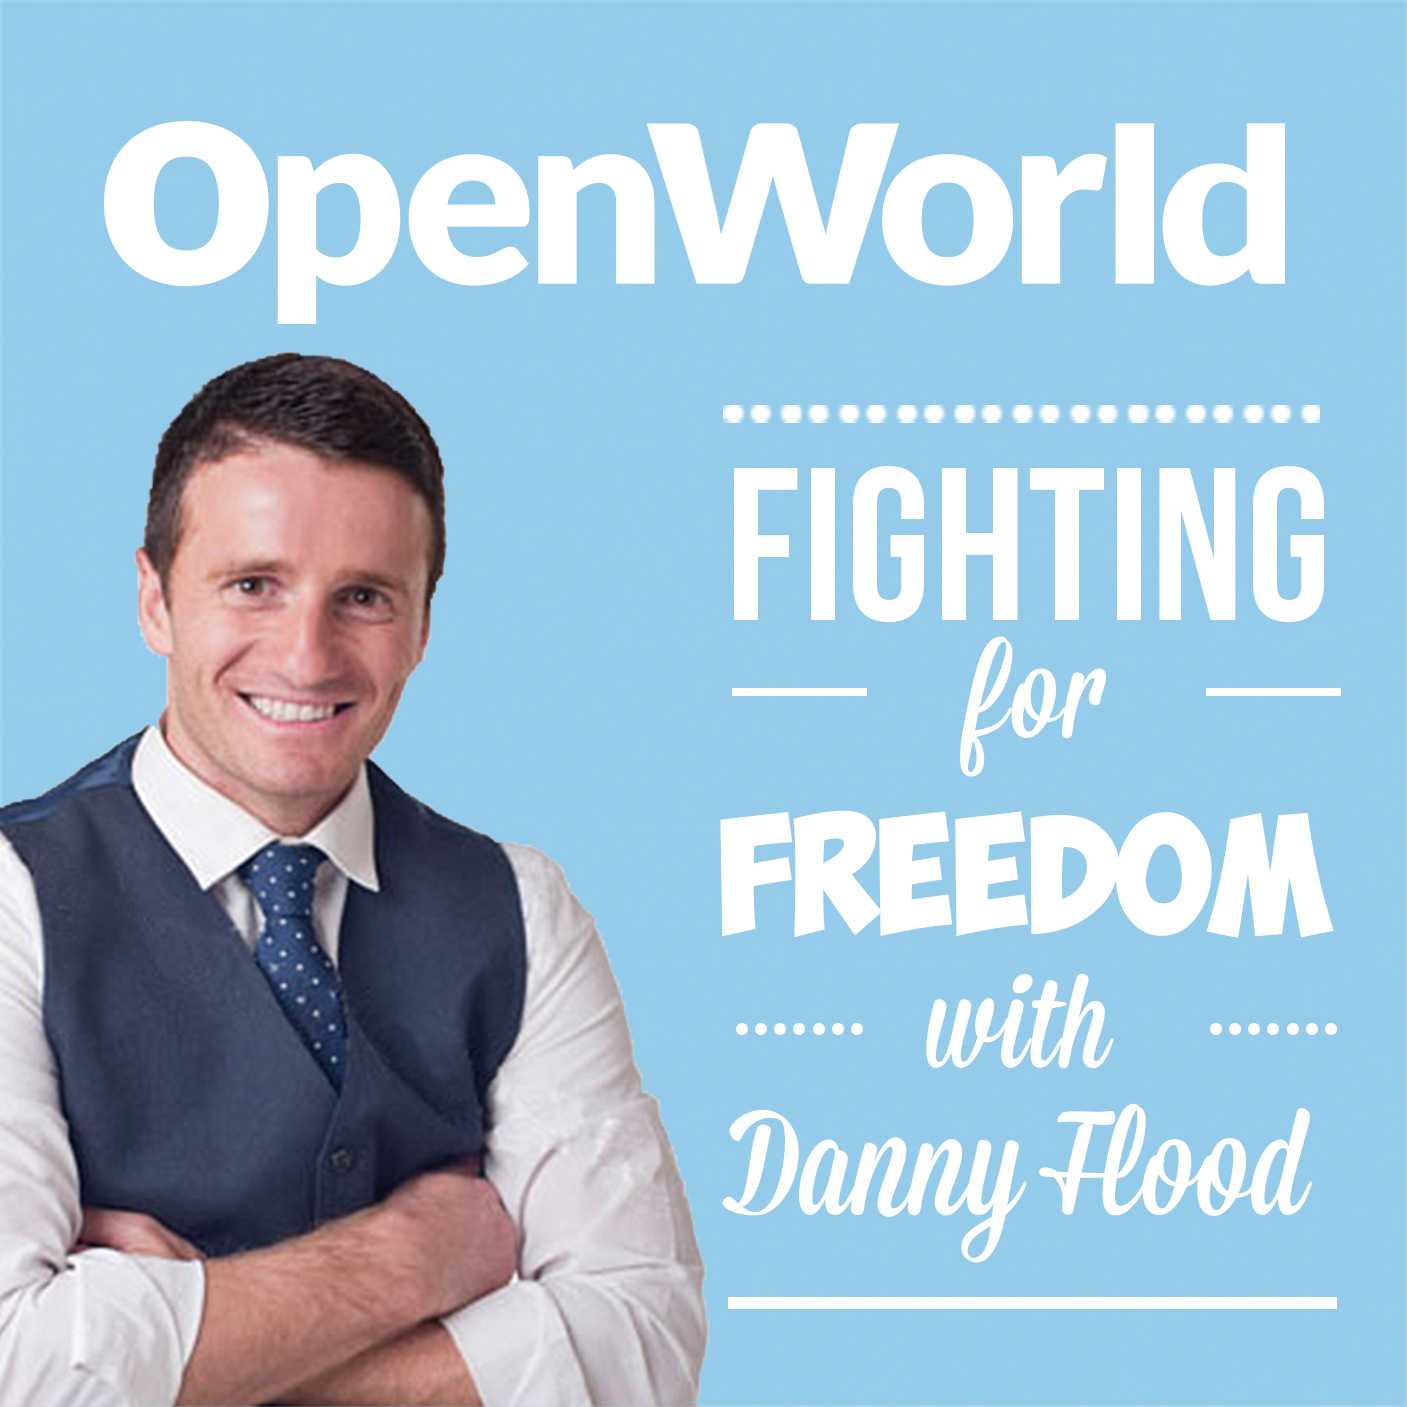 openworld fighting for freedom